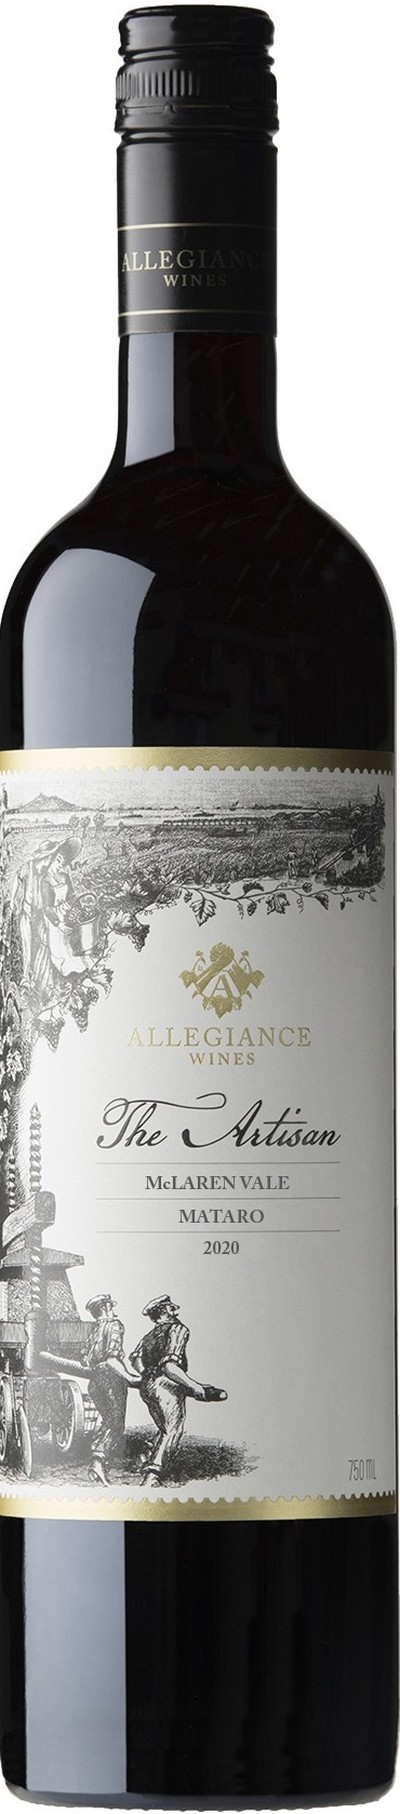 allegiance-wines-the-artisan-mclaren-vale-mataro-2020